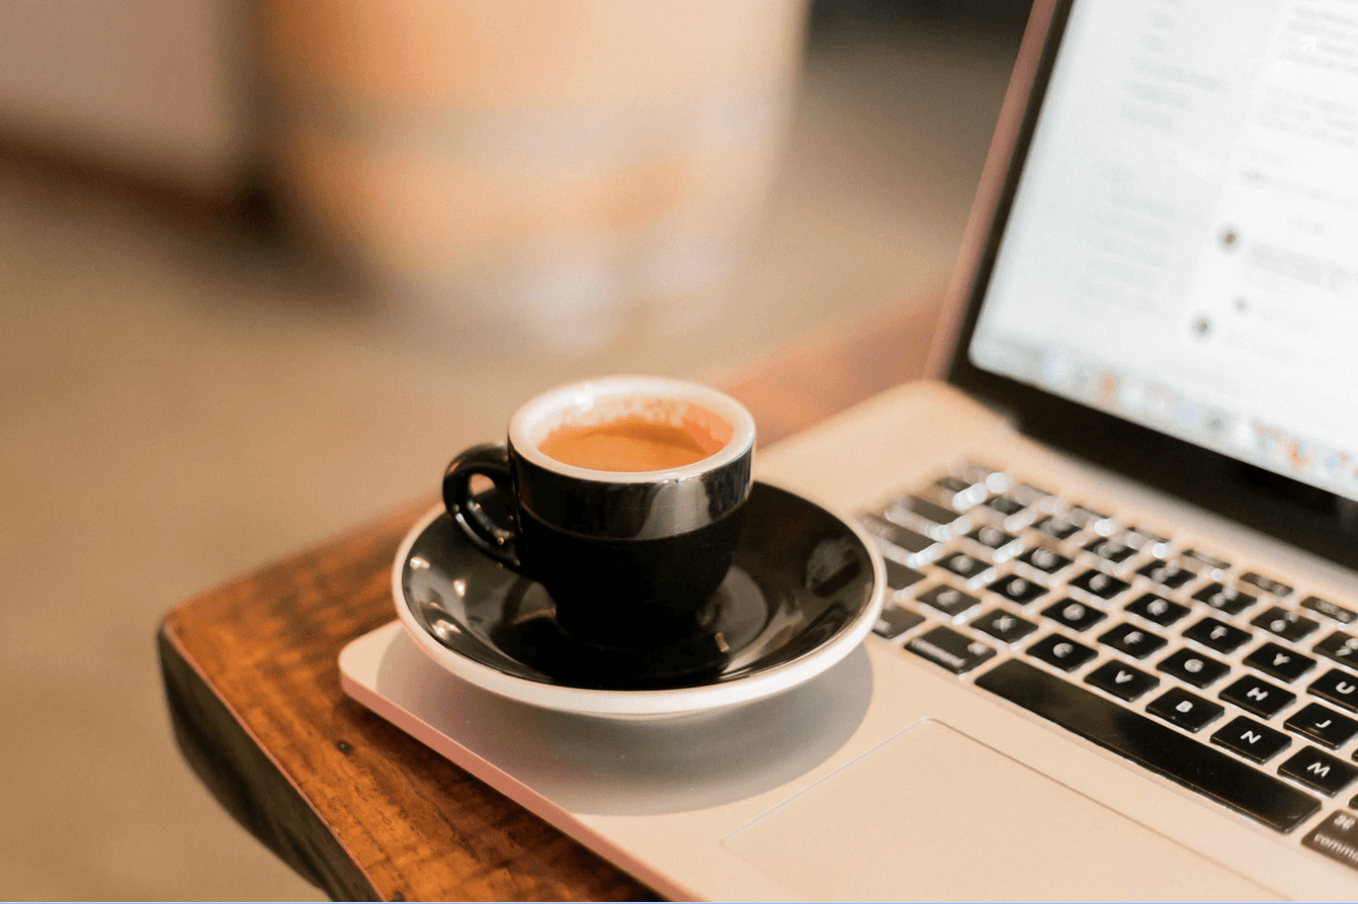 Coffee sitting on laptop